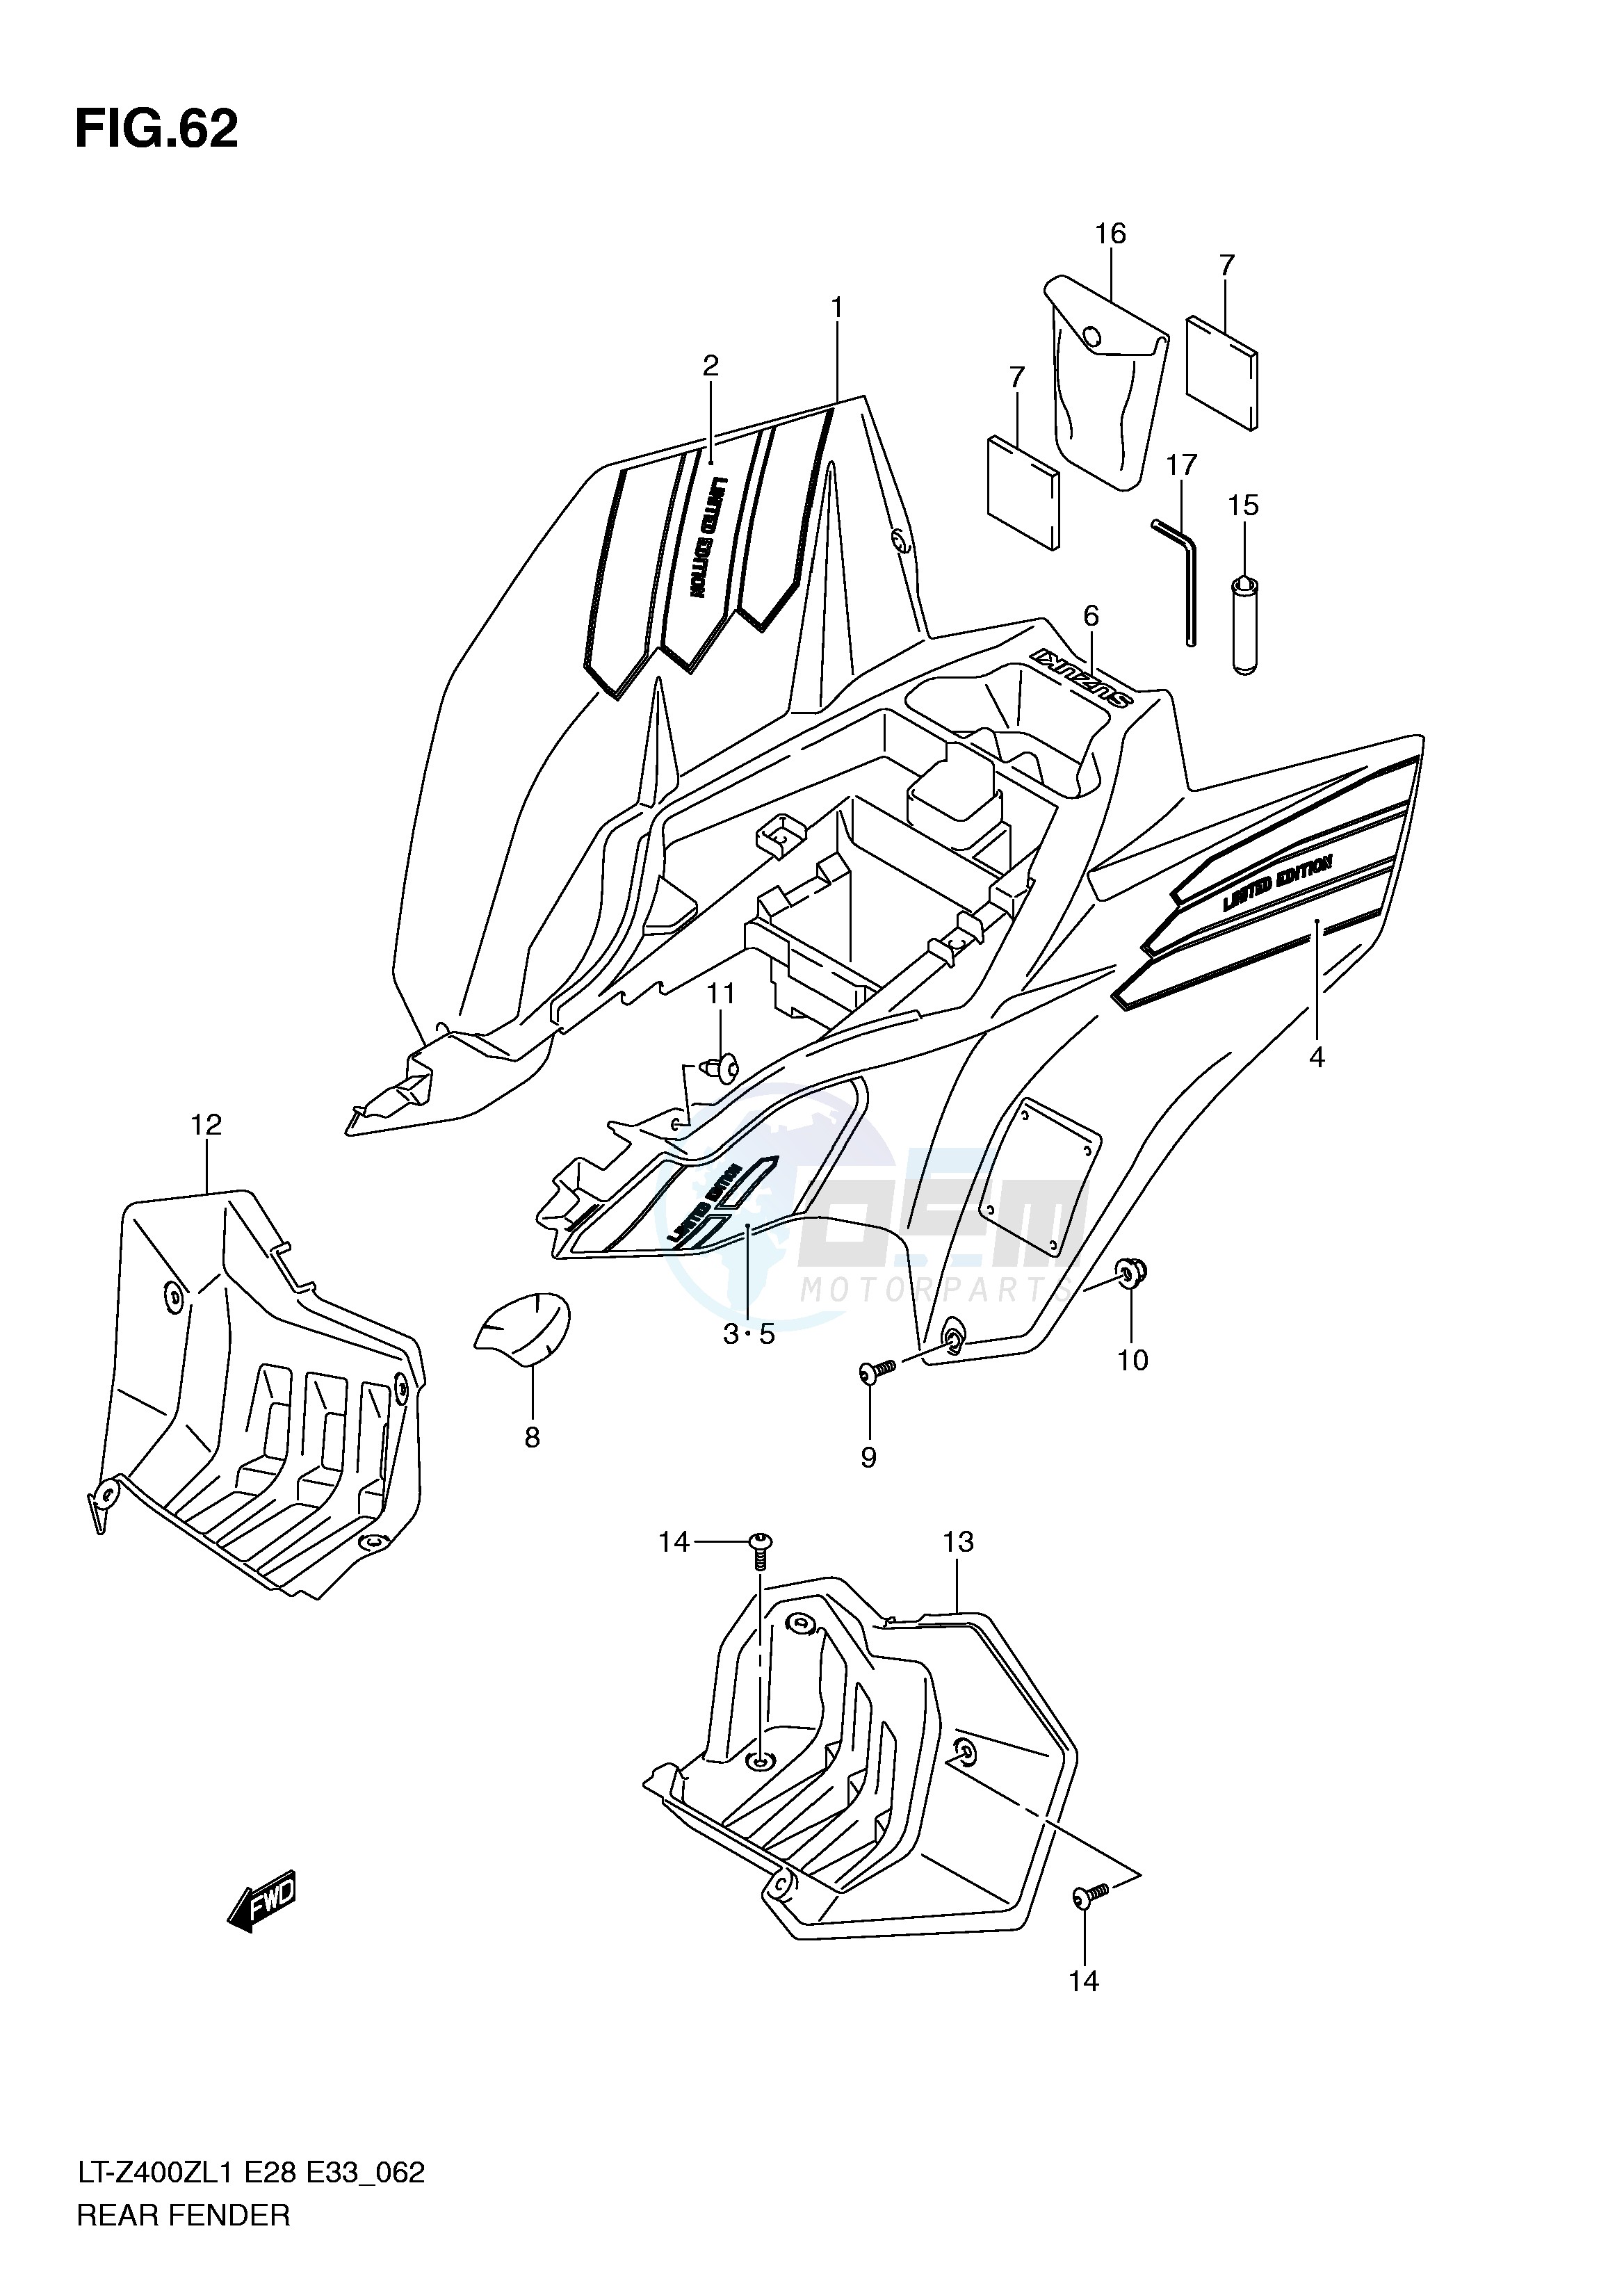 REAR FENDER (LT-Z400ZL1 E28) blueprint